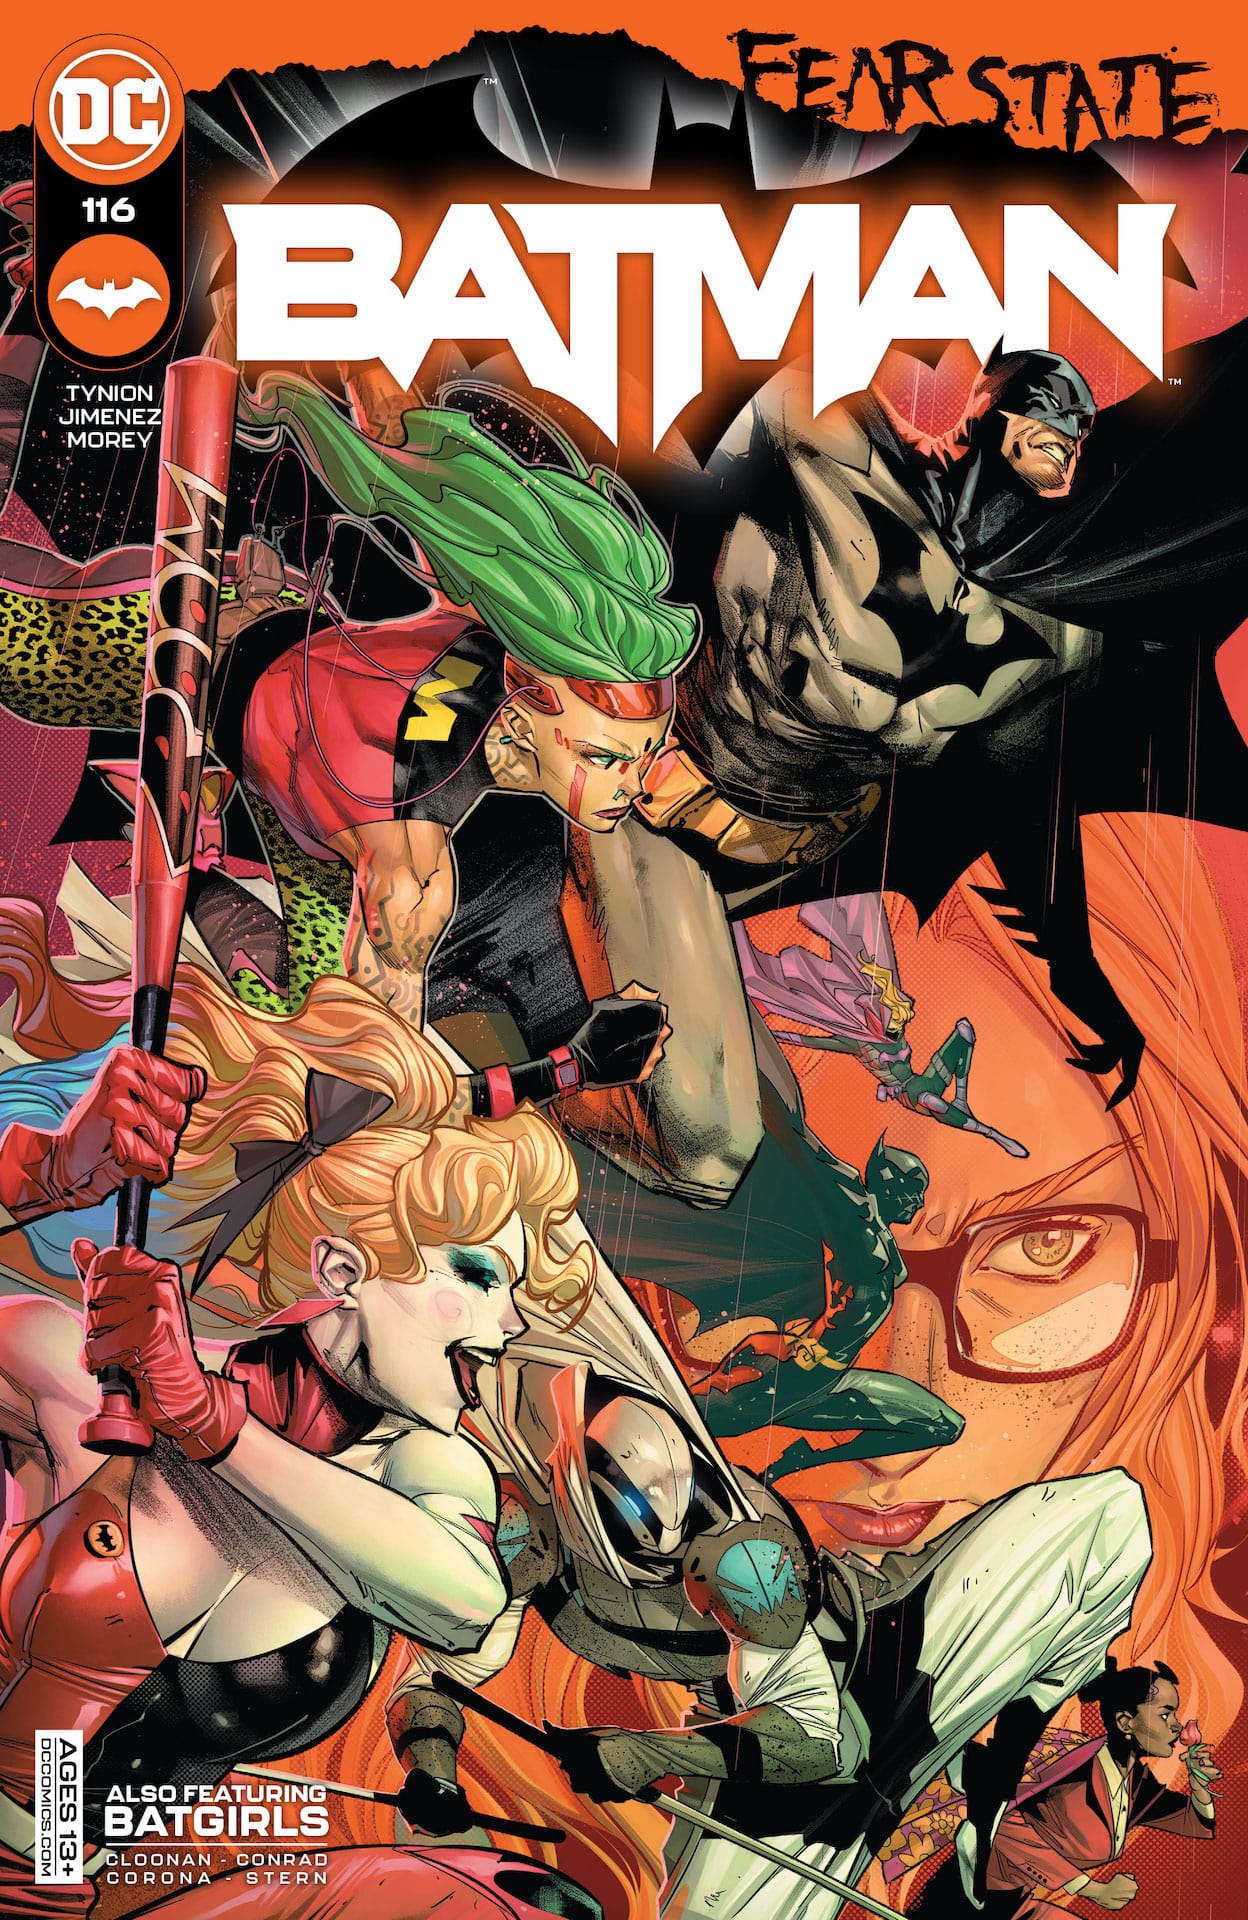 DC Preview: Batman Vol 3 #116